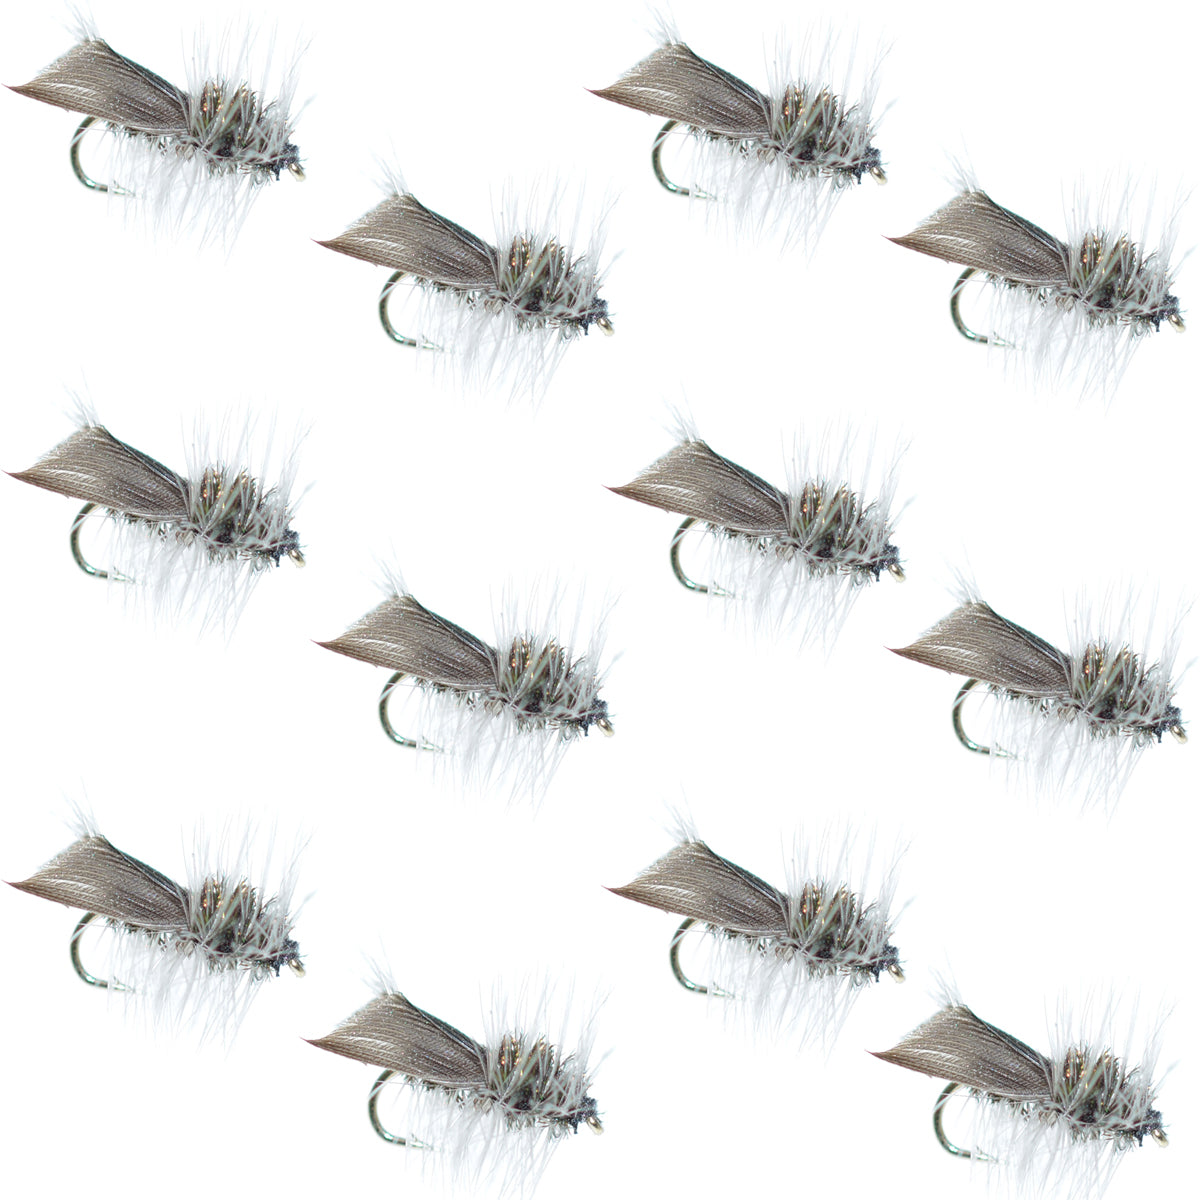 Hemingway Caddis Dry Fly - 1 docena de moscas anzuelo tamaño 16